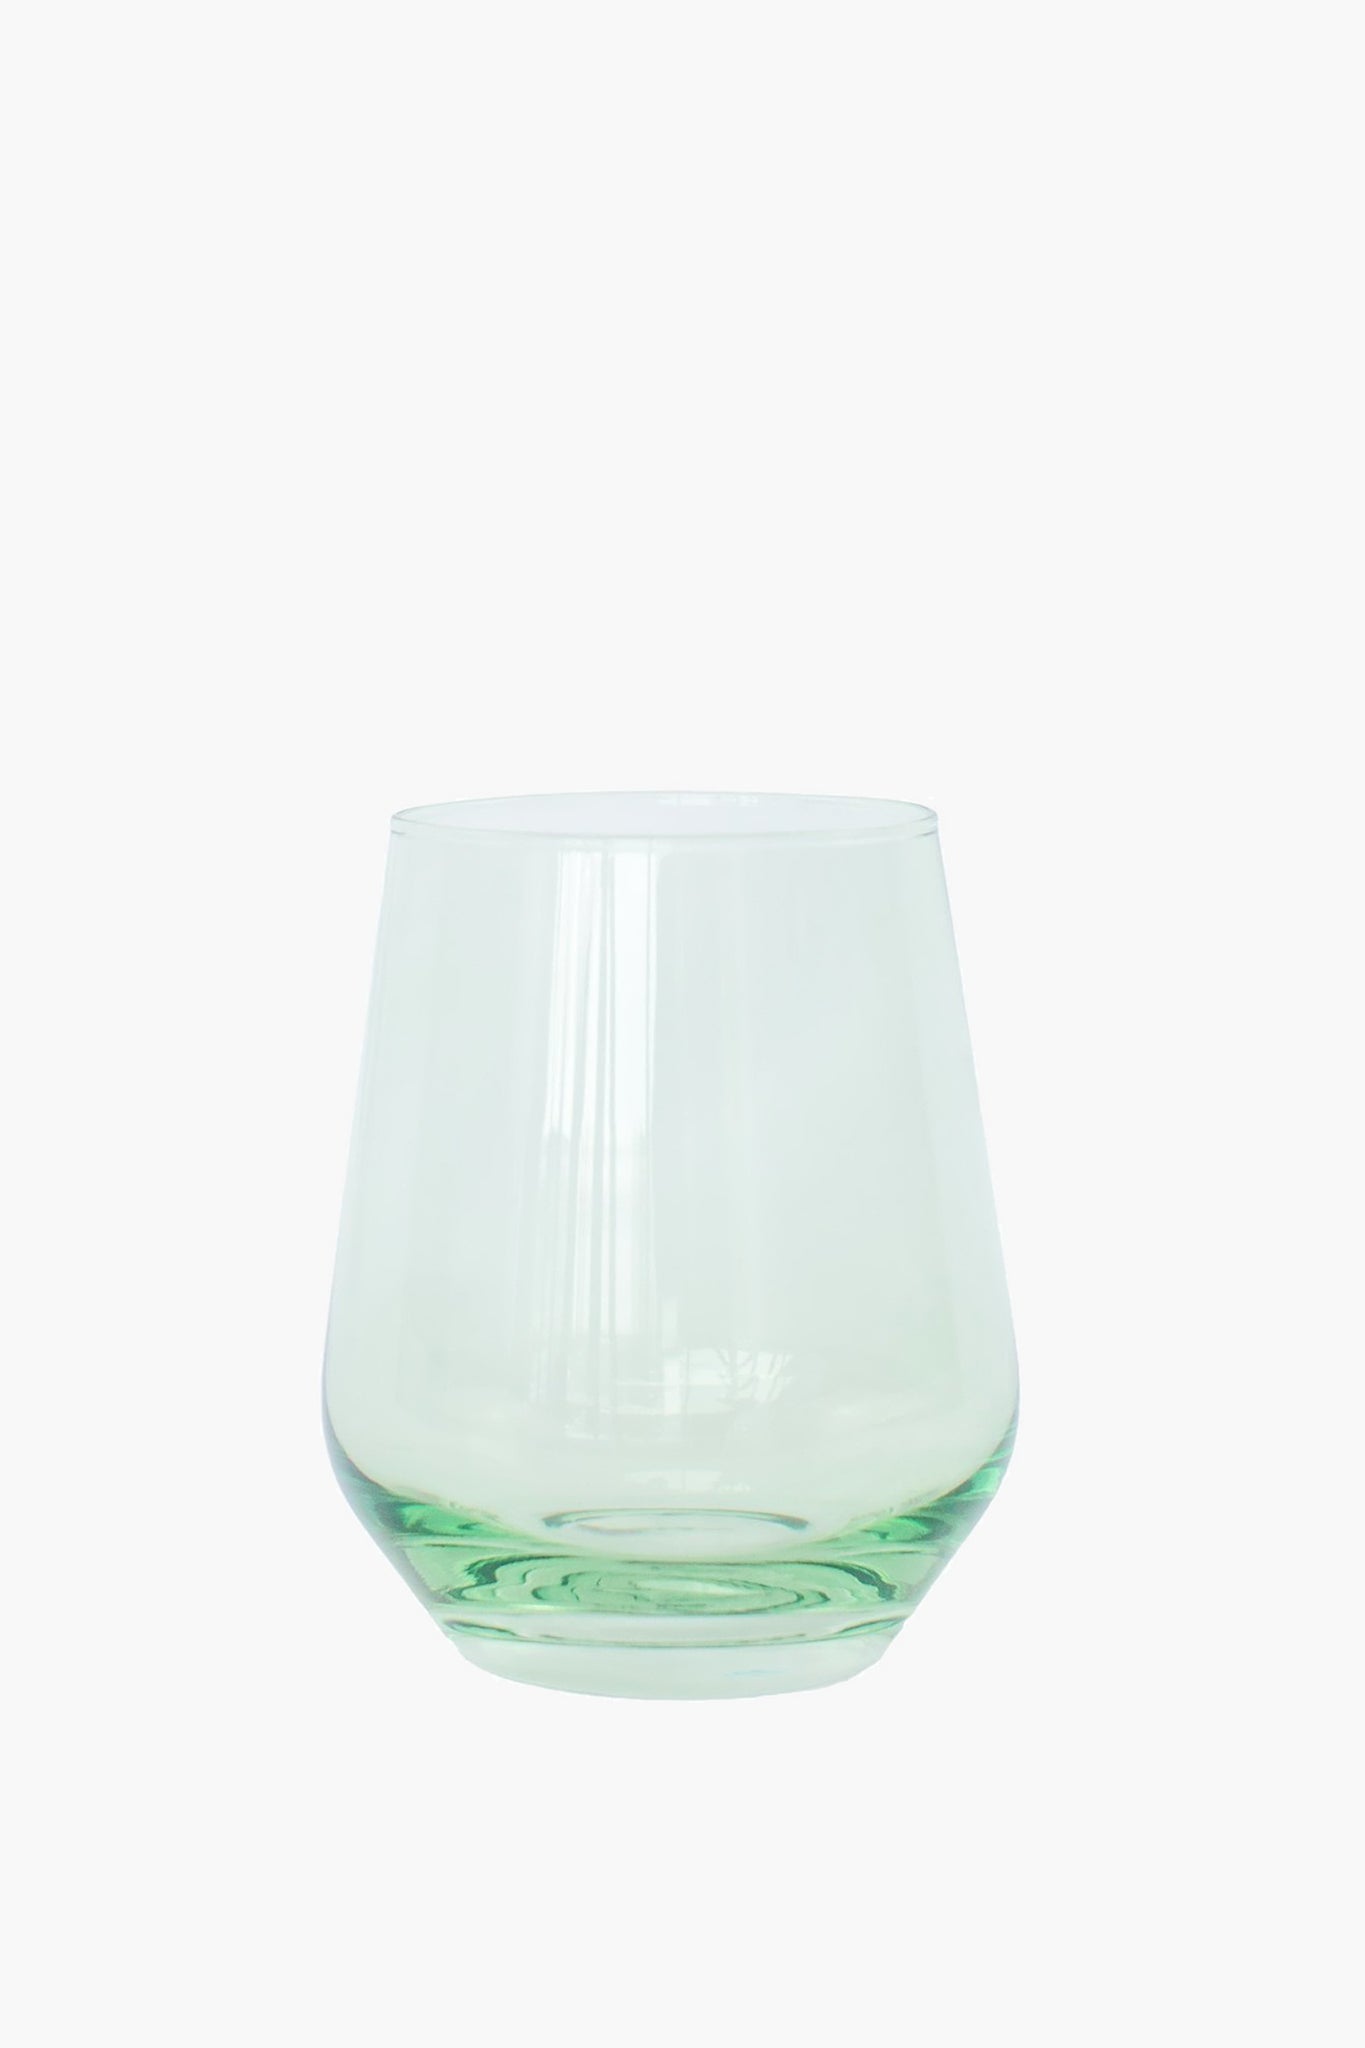 Estelle Colored Glass Estelle Stemless Wine Glass, Set of 6 - Mint Green